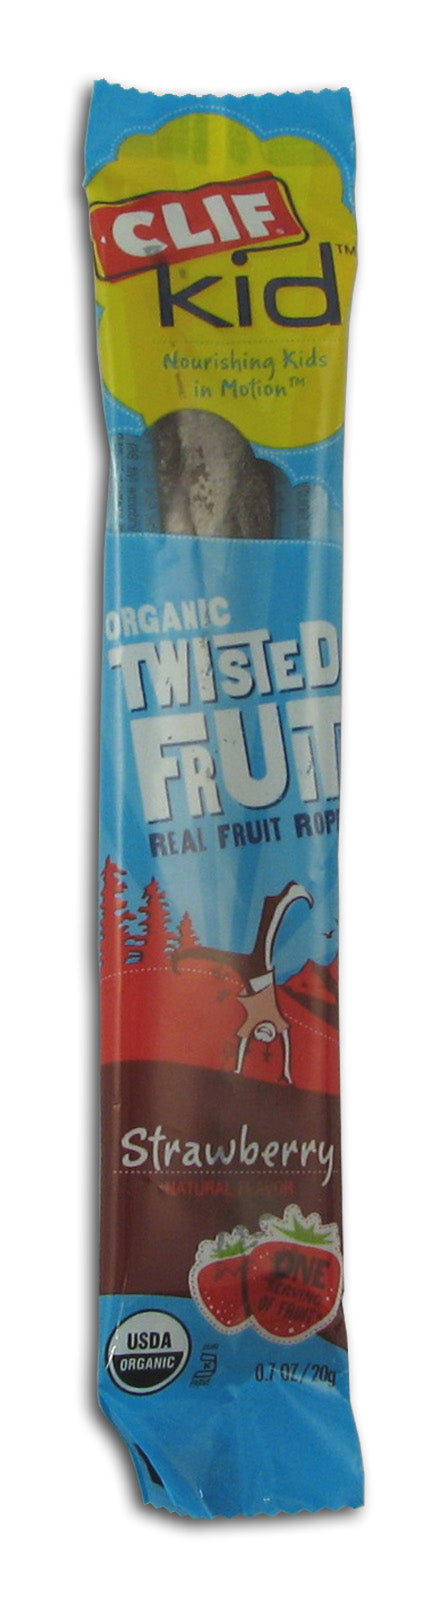 Twisted Fruit, Strawberry, Organic